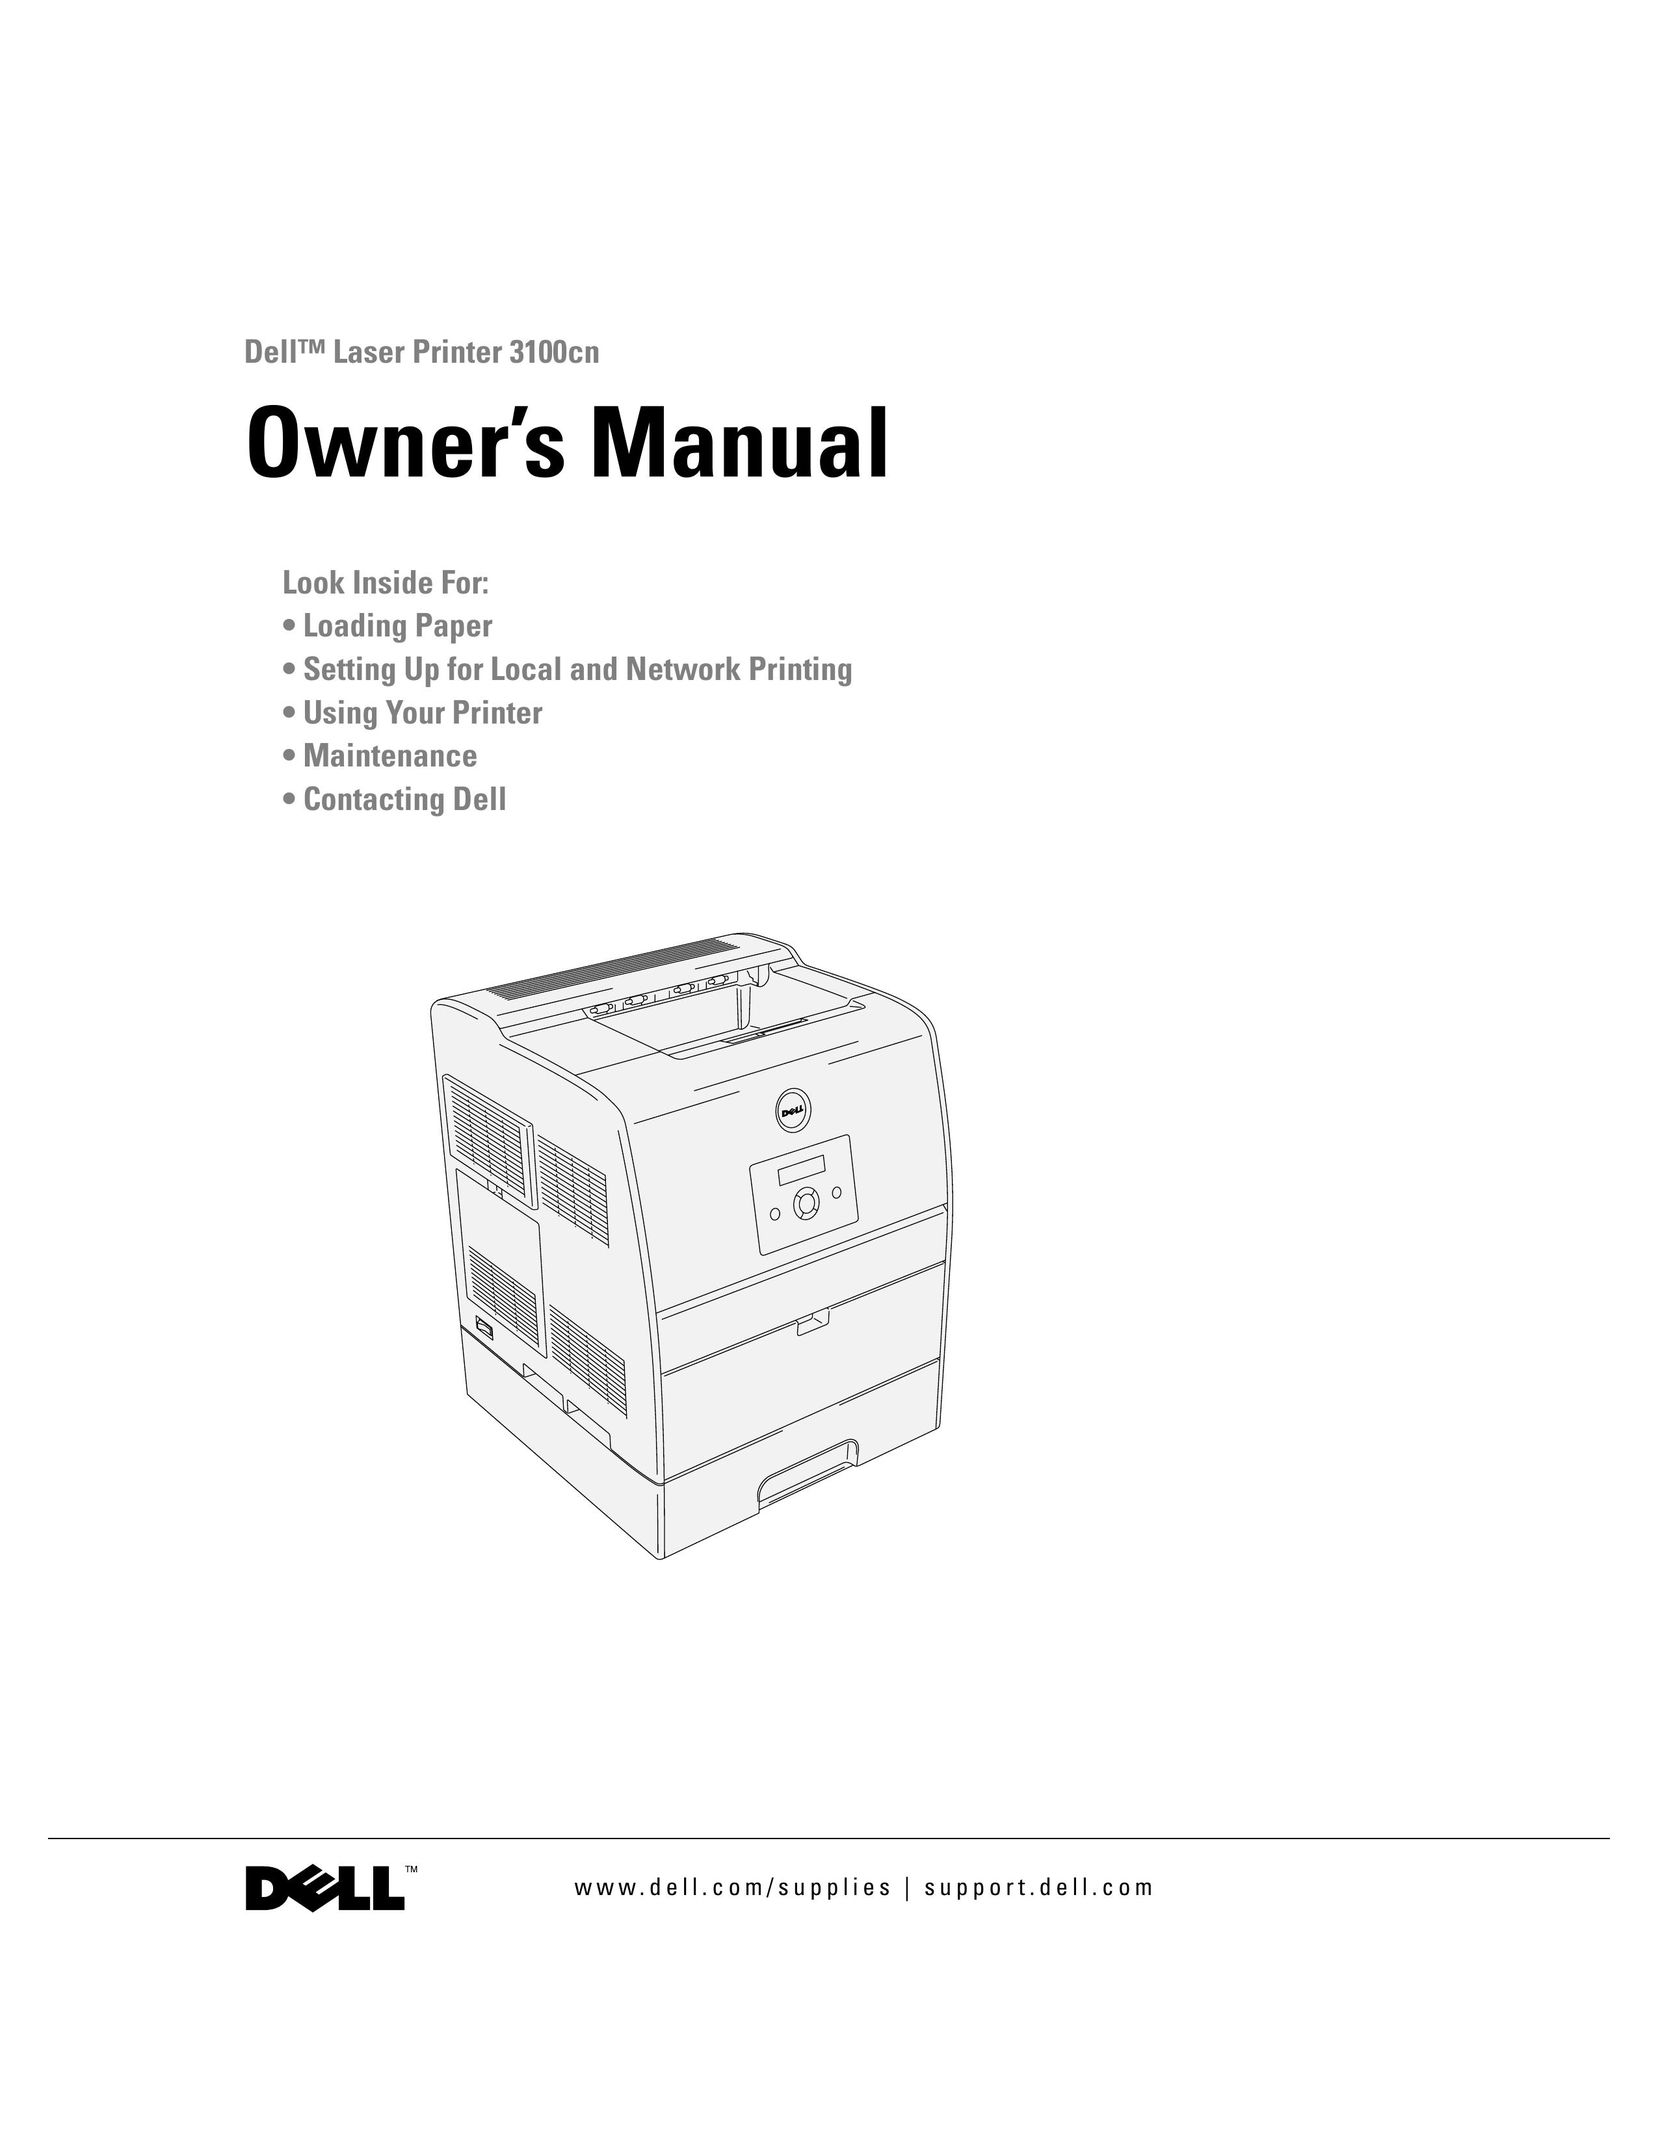 Dell 3100cn Printer User Manual